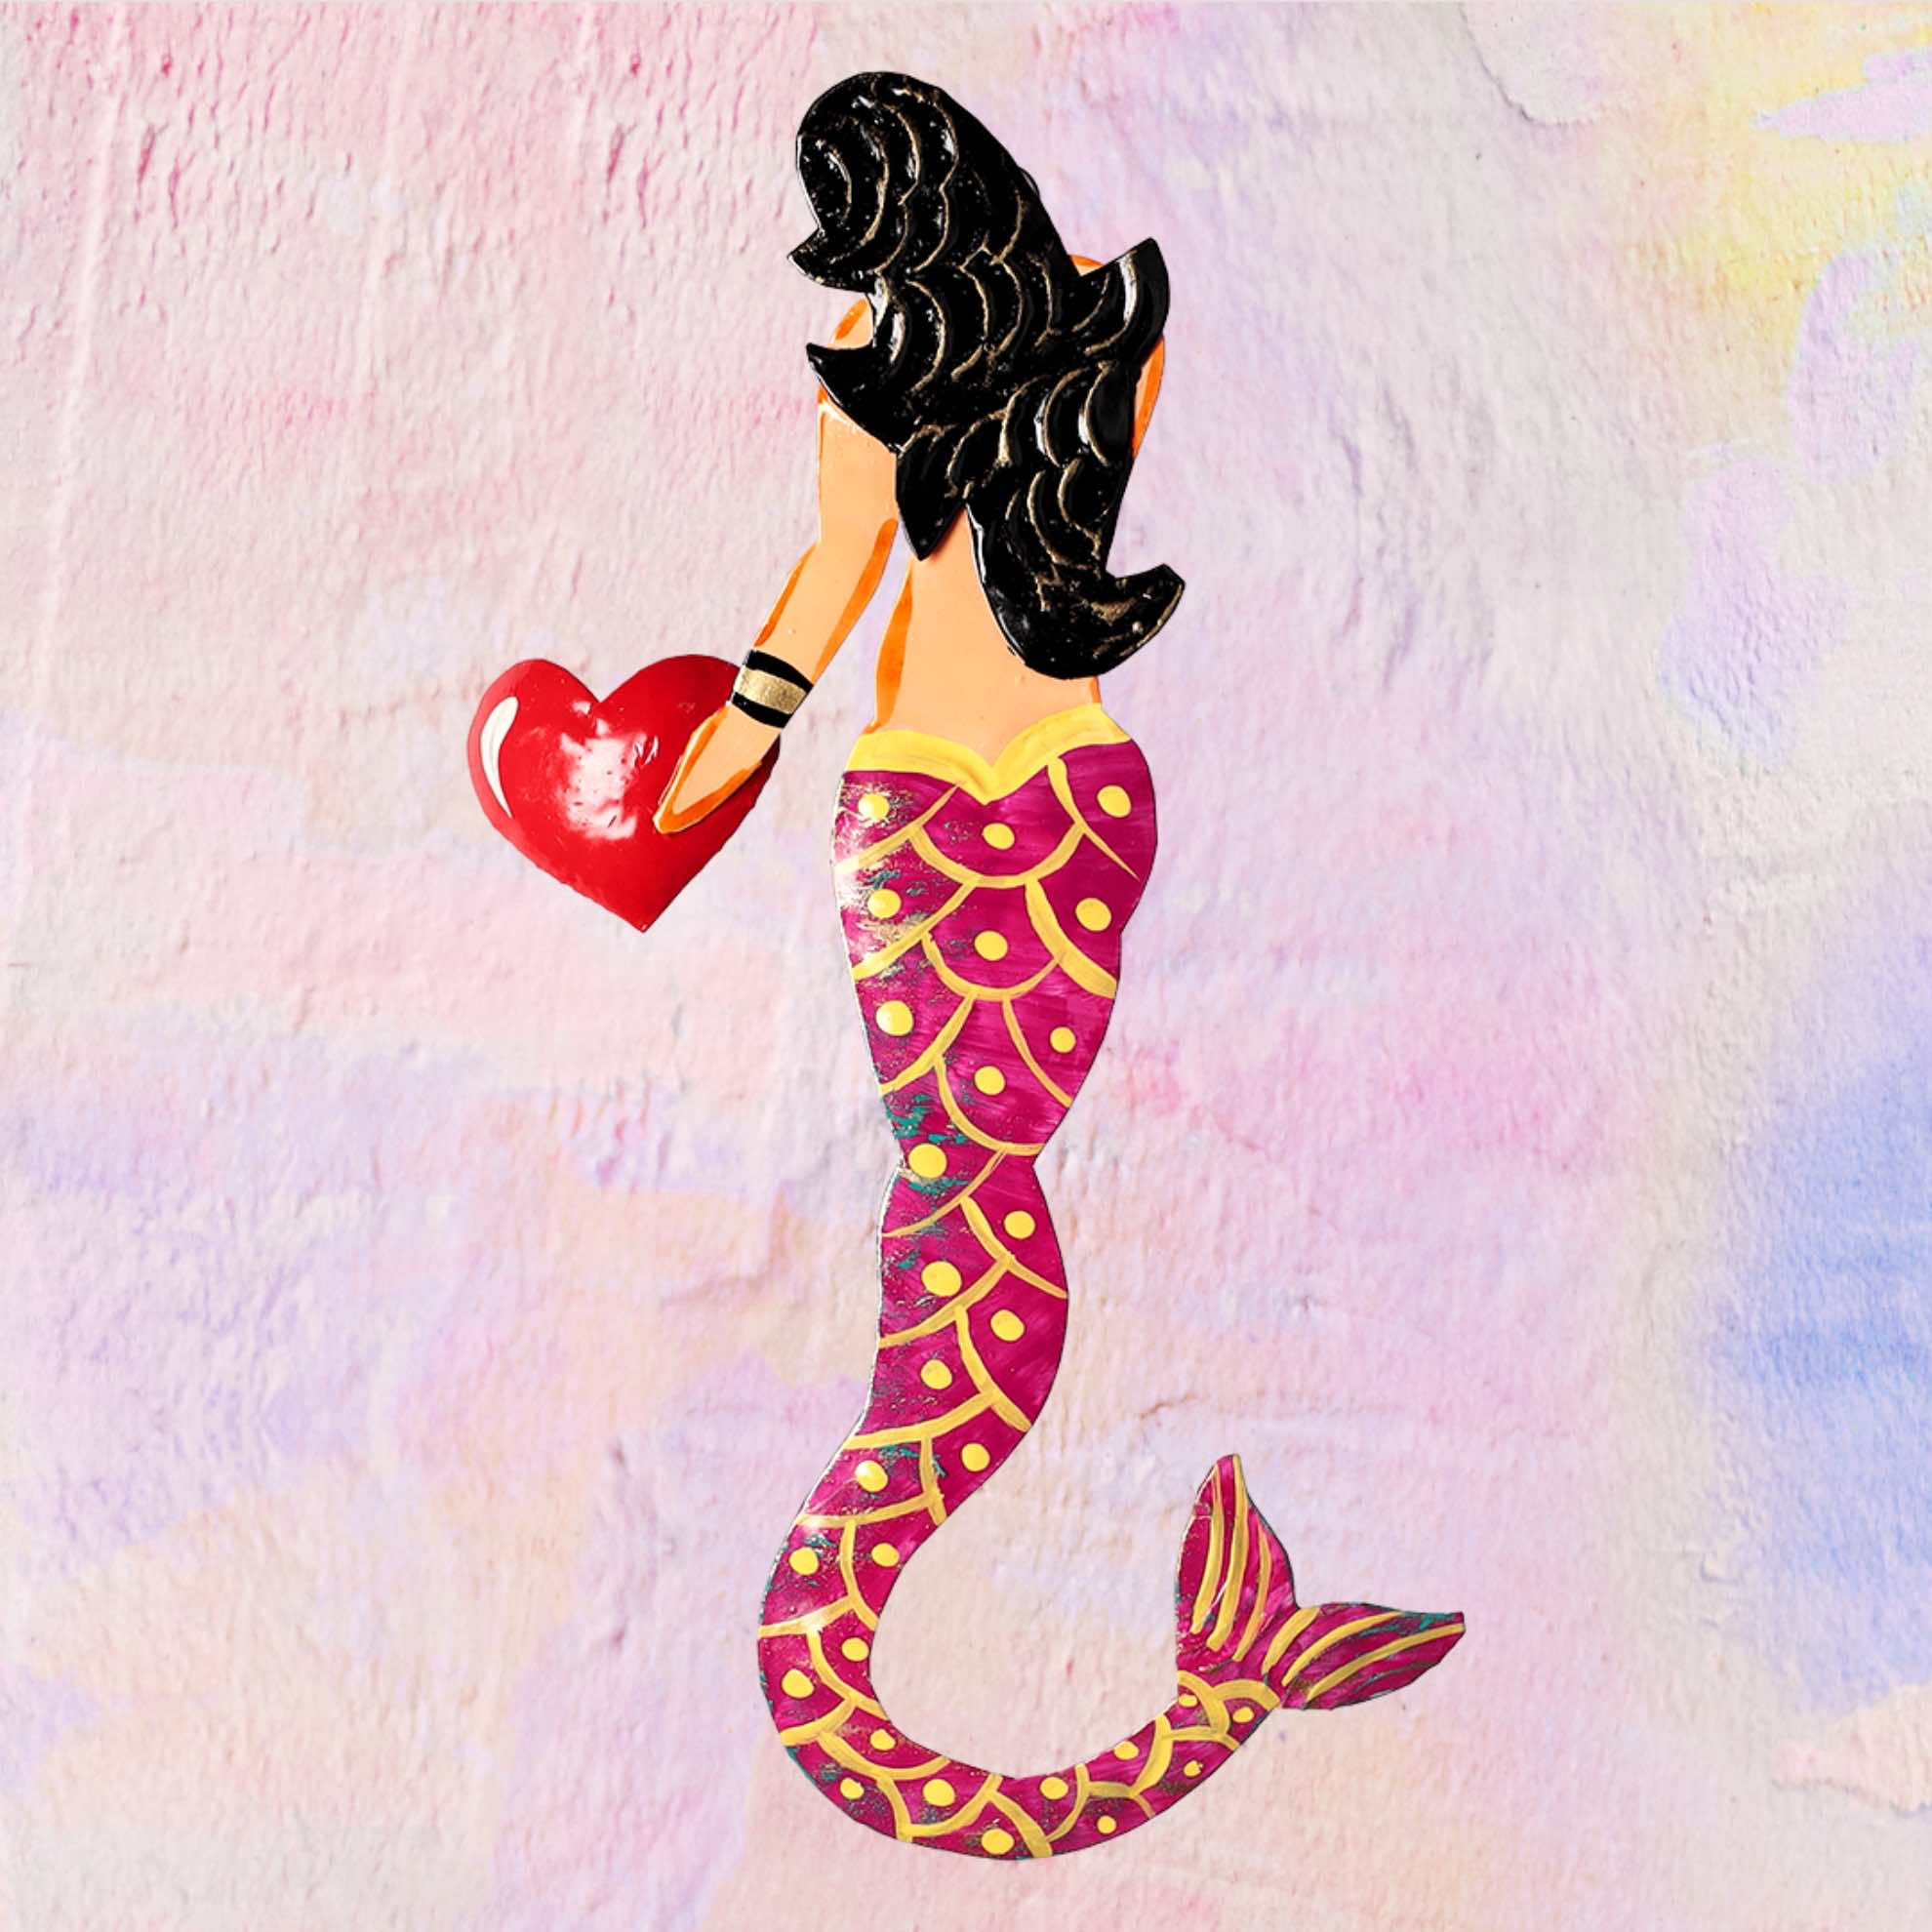 Mermaid with Heart